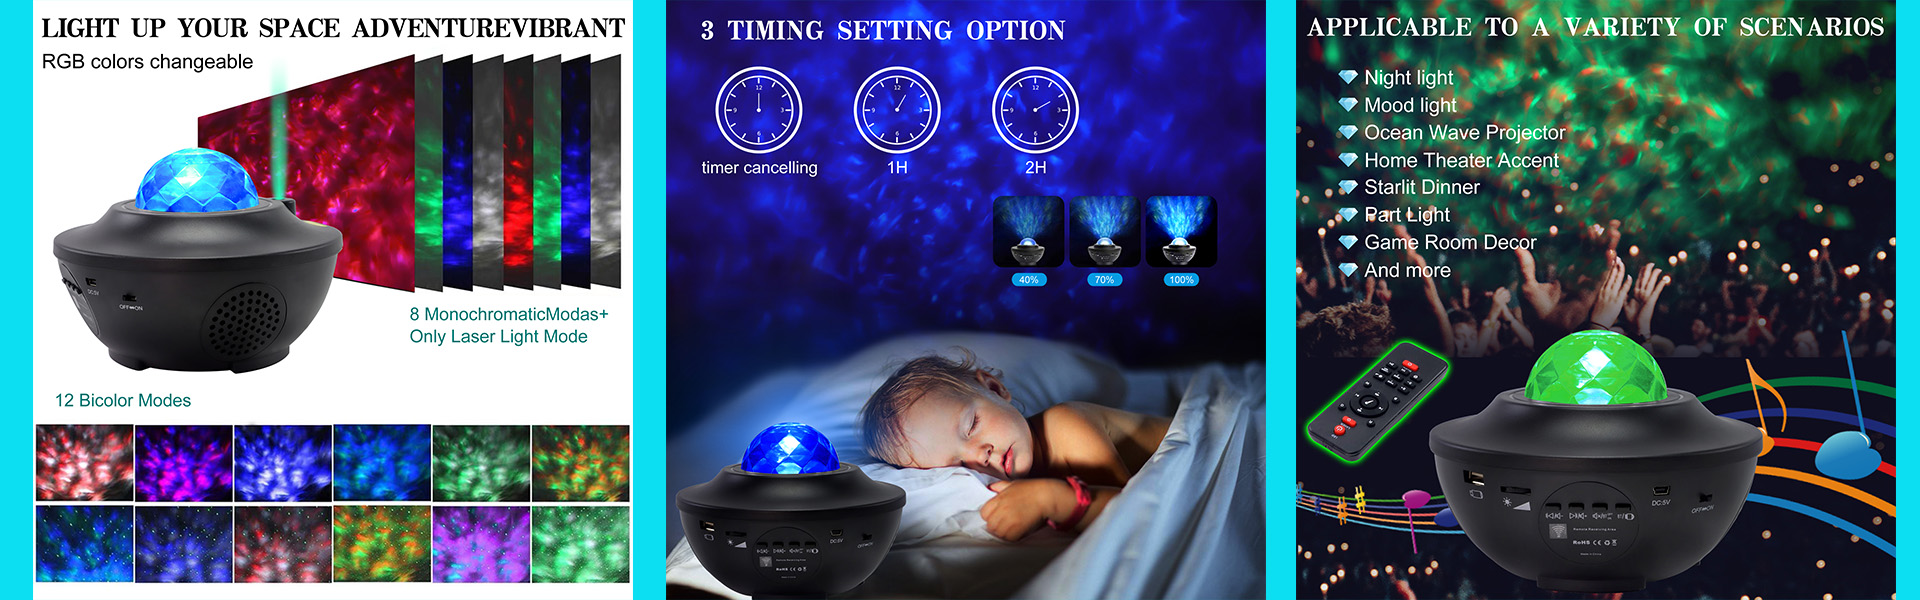 Kopparsträngljus, Starry projektor, 3dnattljus,Xingan Xian Yixing Electronics Co., Ltd.